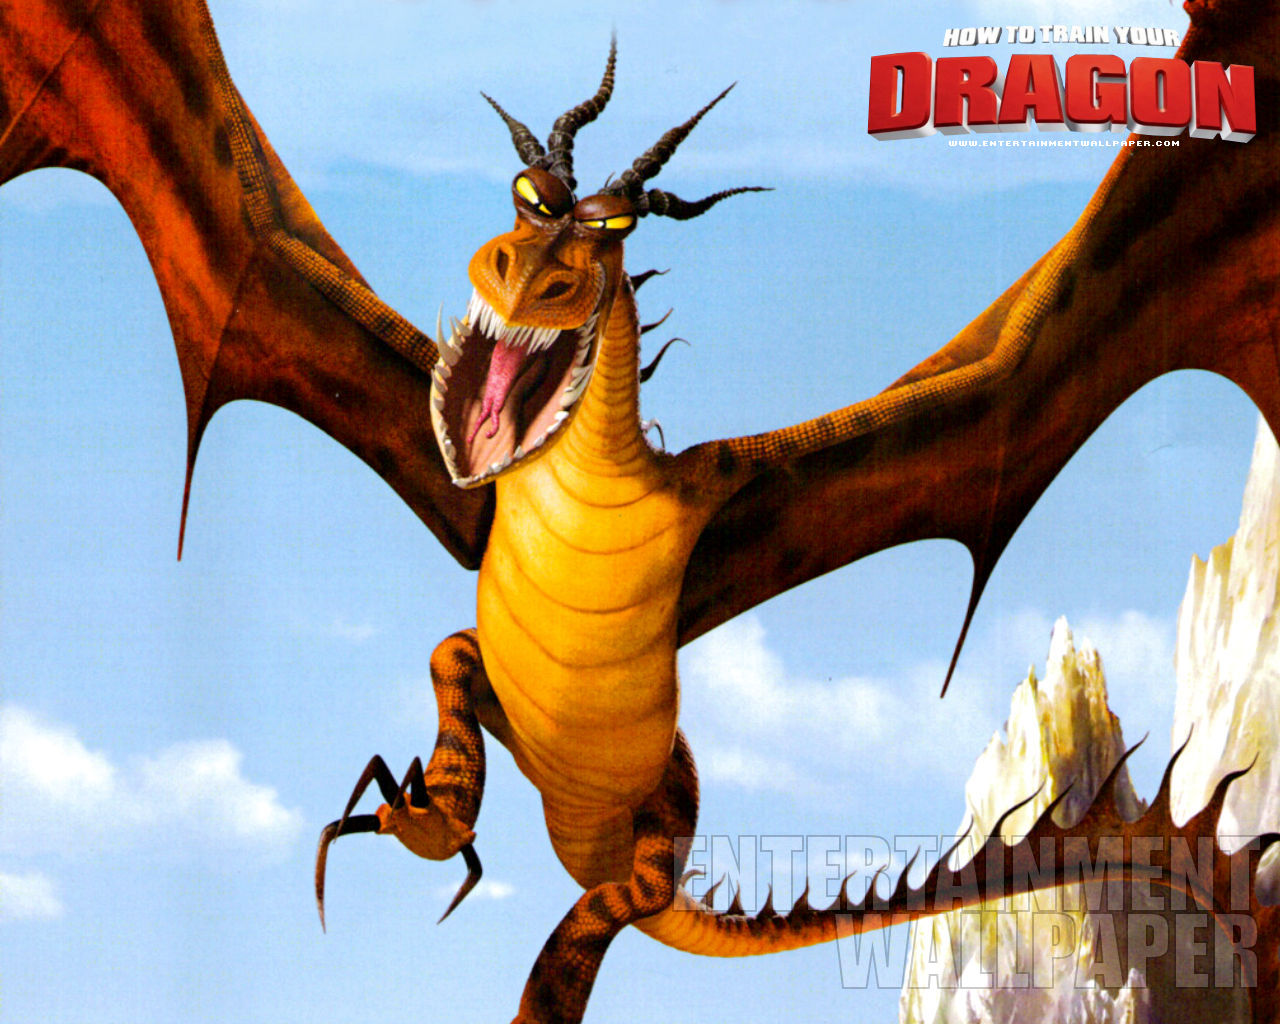 Ladies and gentlemen, I give you Smaug the Dragon.